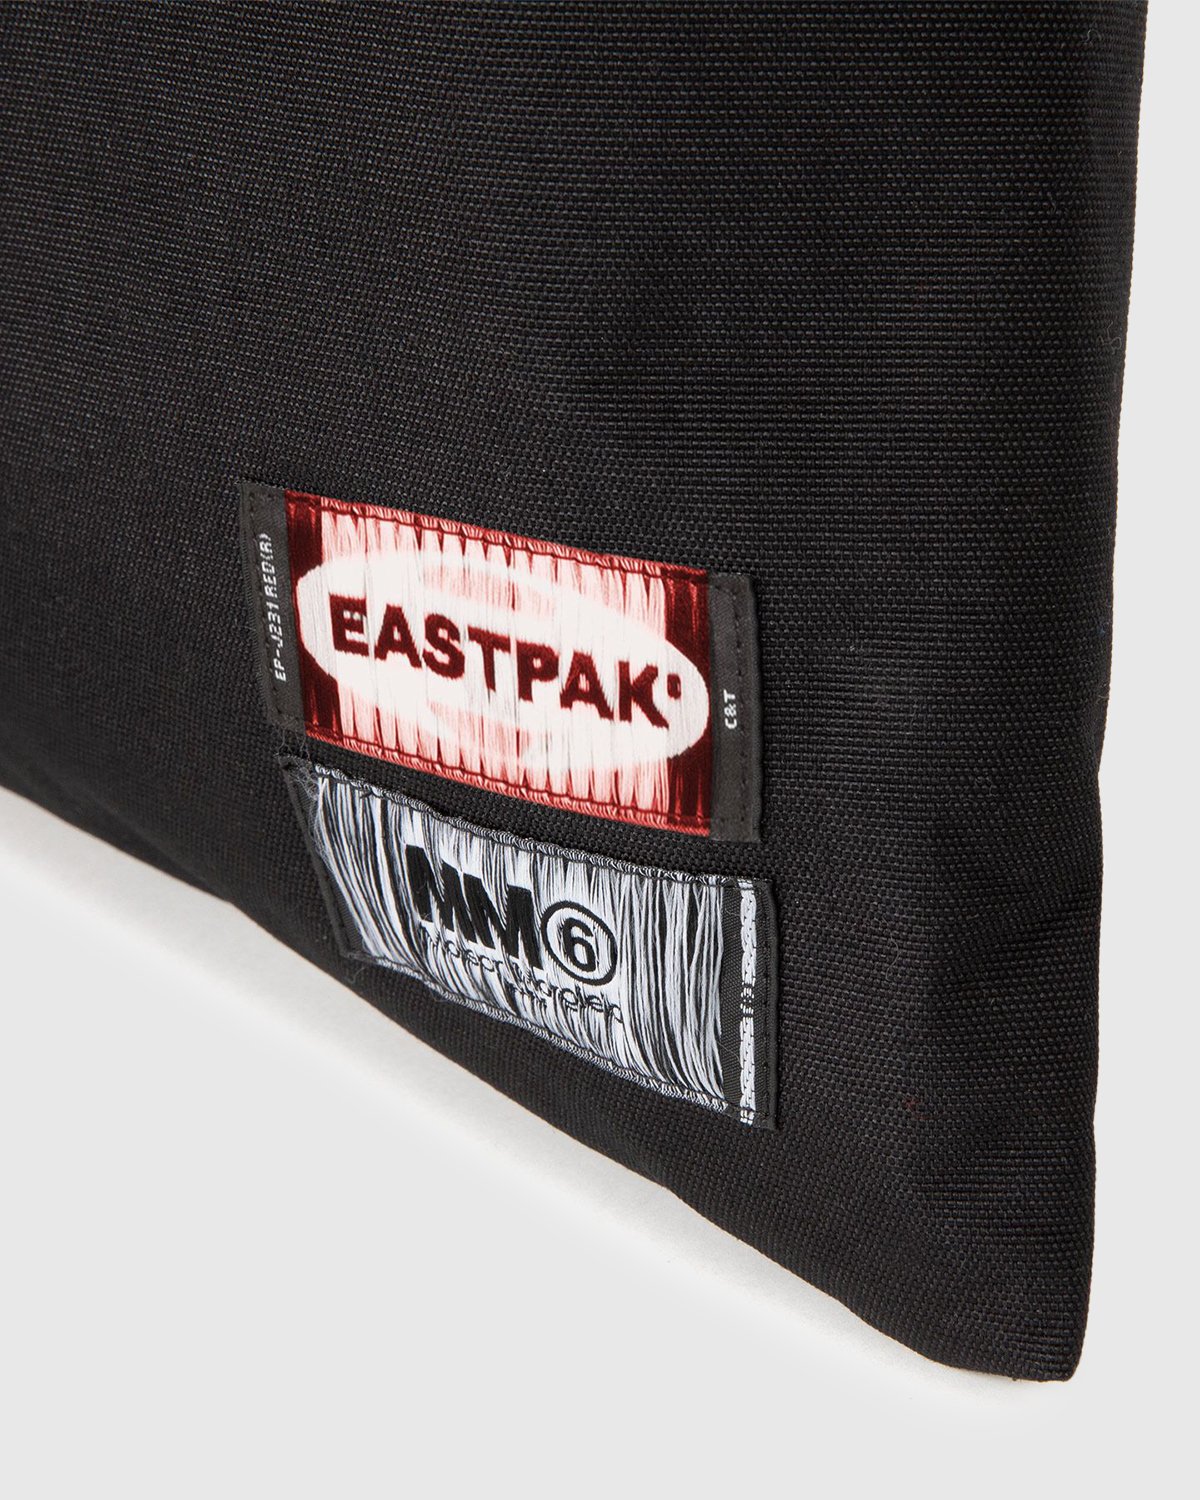 MM6 Maison Margiela x Eastpak - Shopping Bag Black - Accessories - Black - Image 2